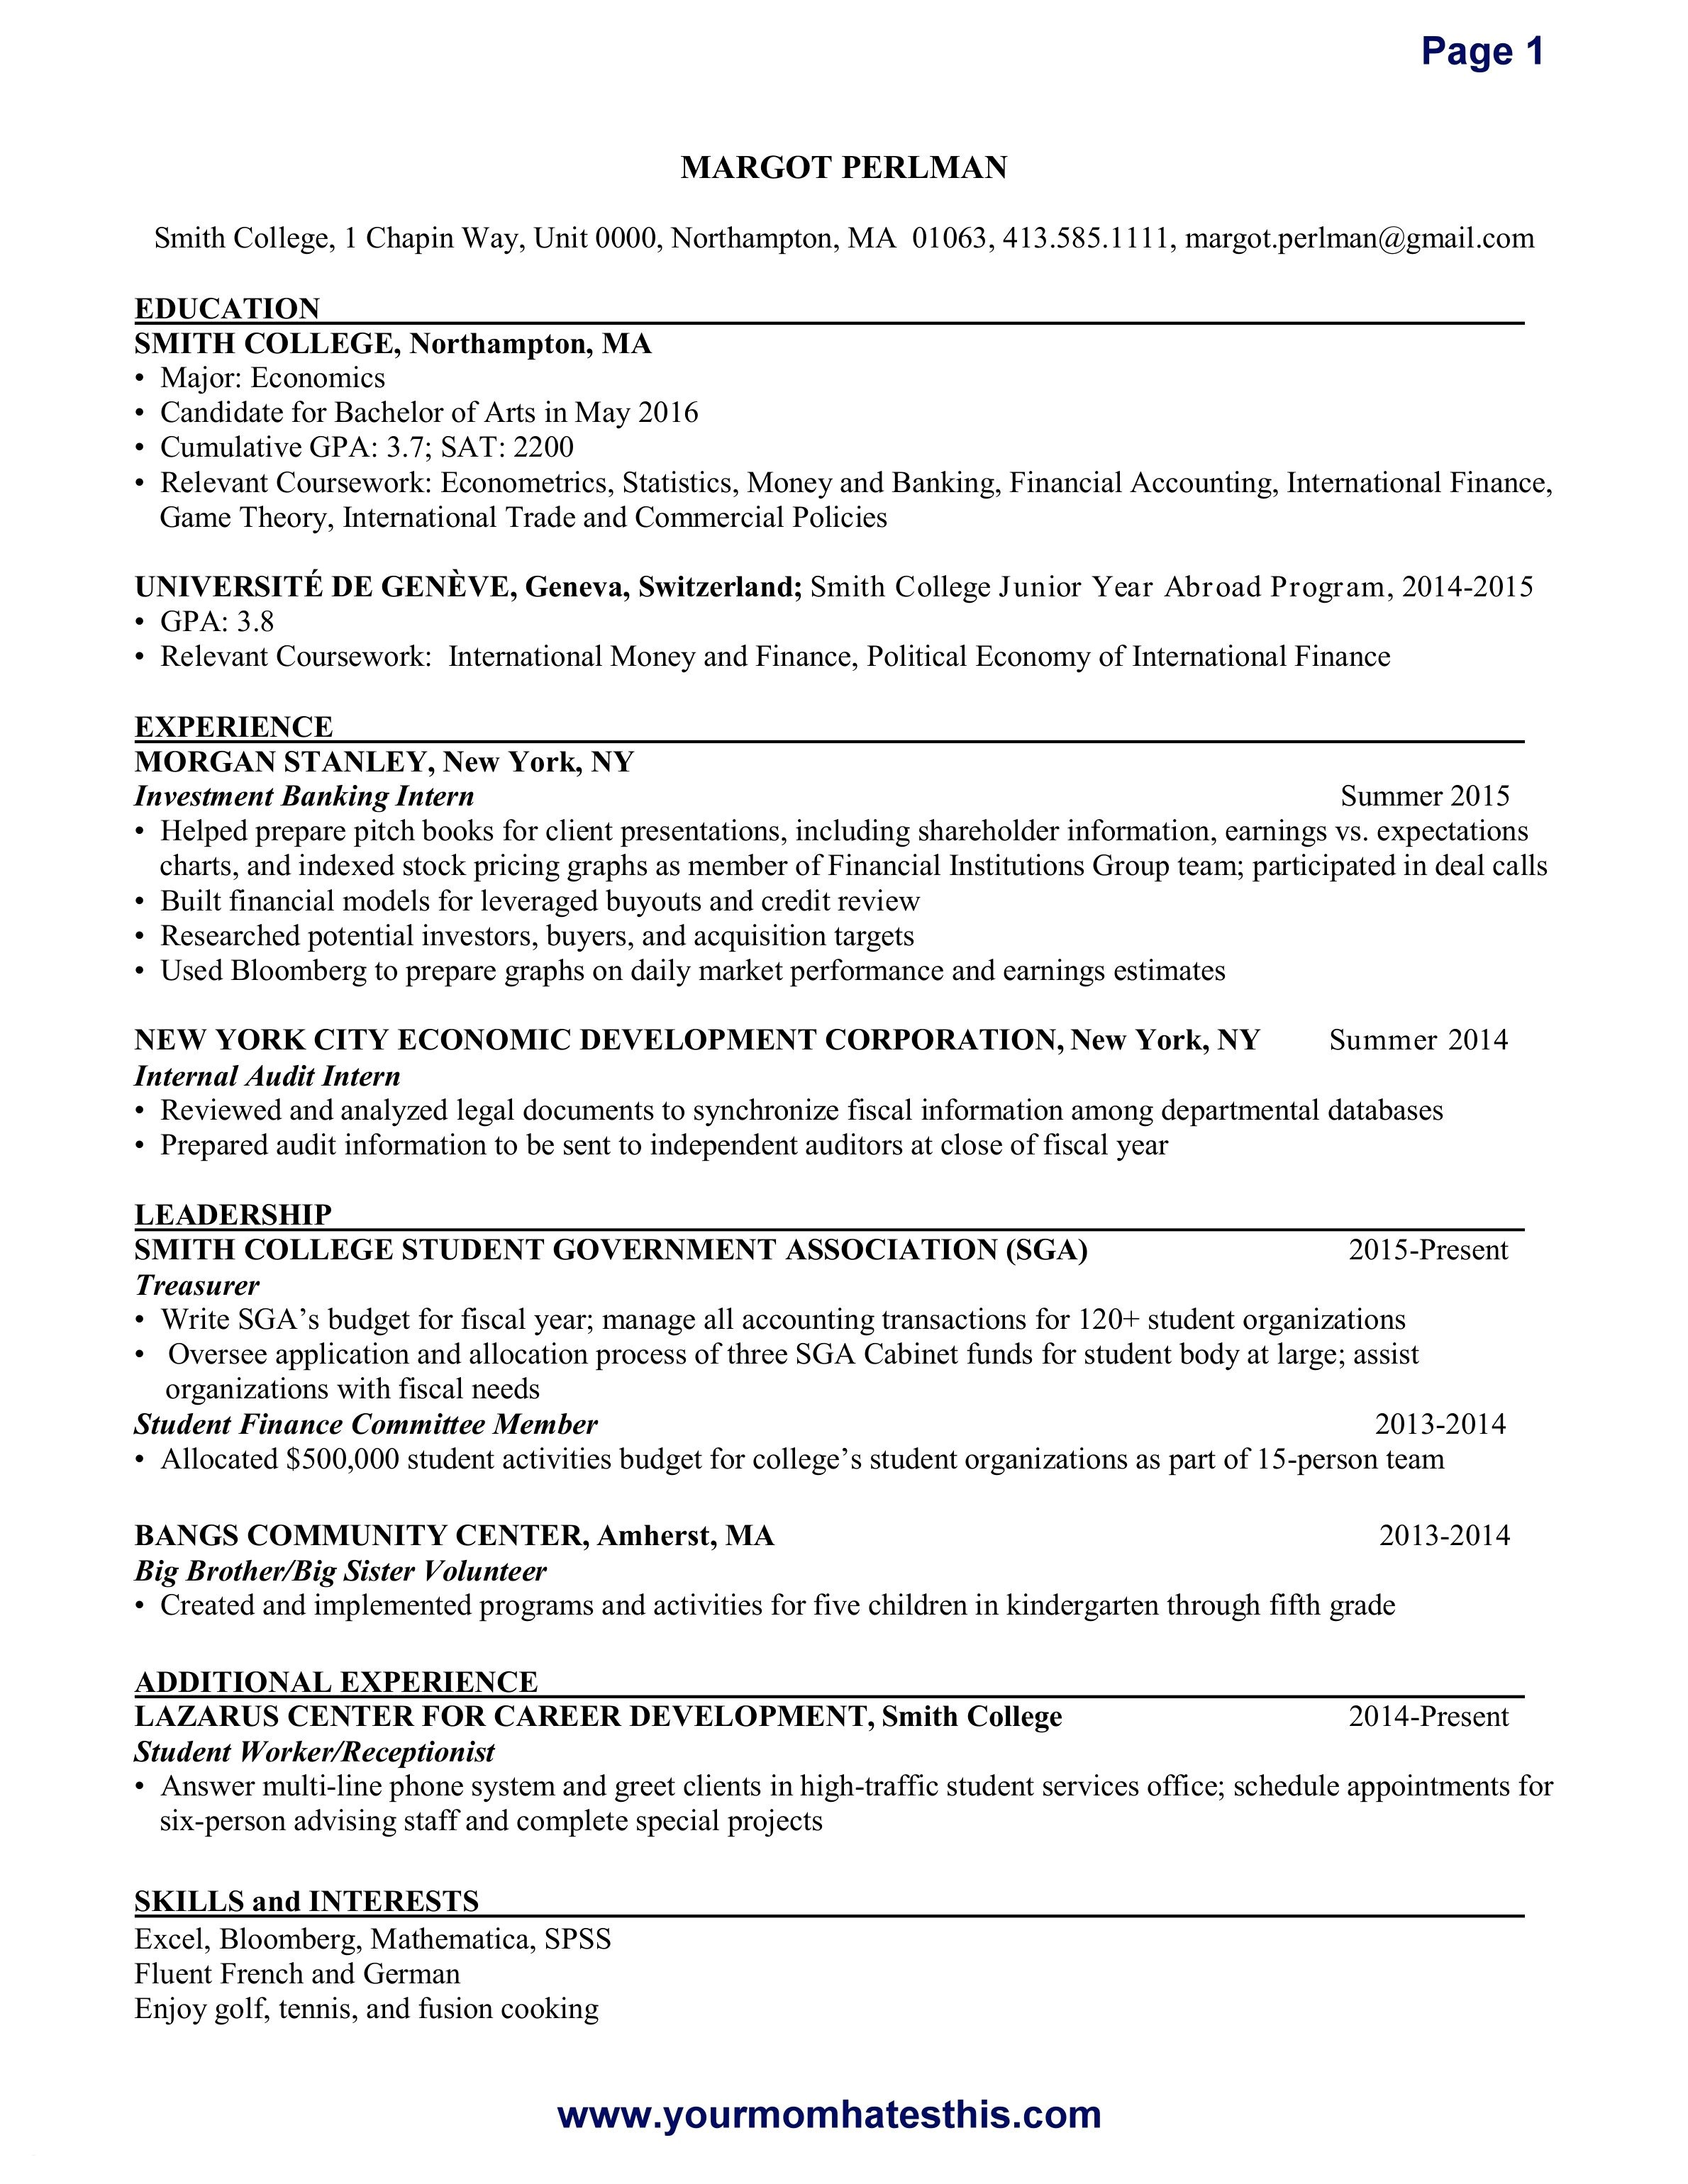 Resume Templates Microsoft Word College Student Resume Template Microsoft Word Templates New Of resume templates microsoft word|wikiresume.com